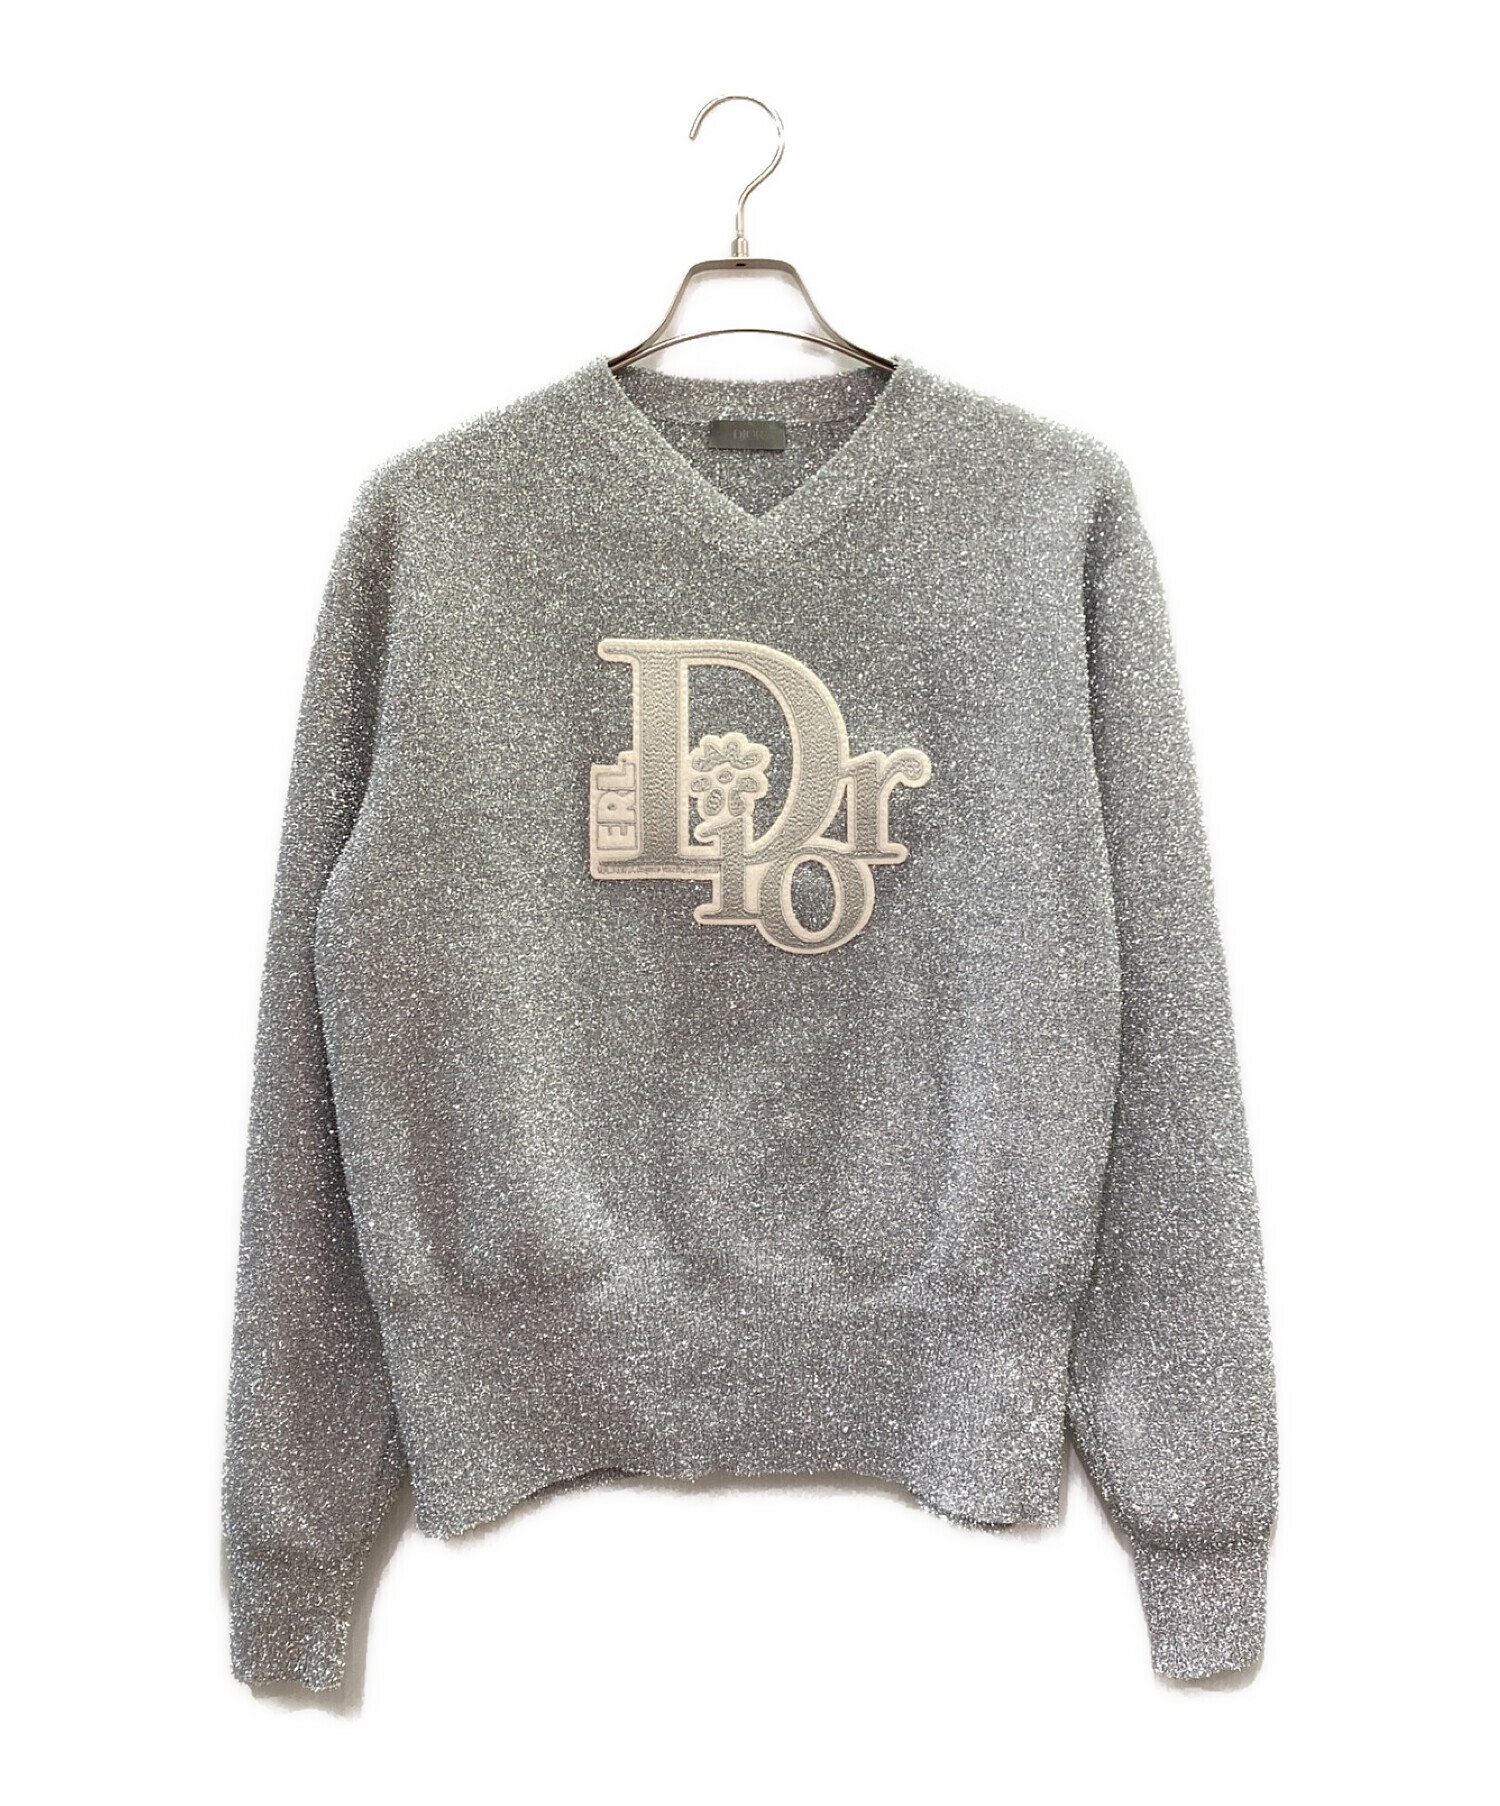 Christian Dior (クリスチャン ディオール) ERLロゴ刺繍 ニット セーター シルバー サイズ:L